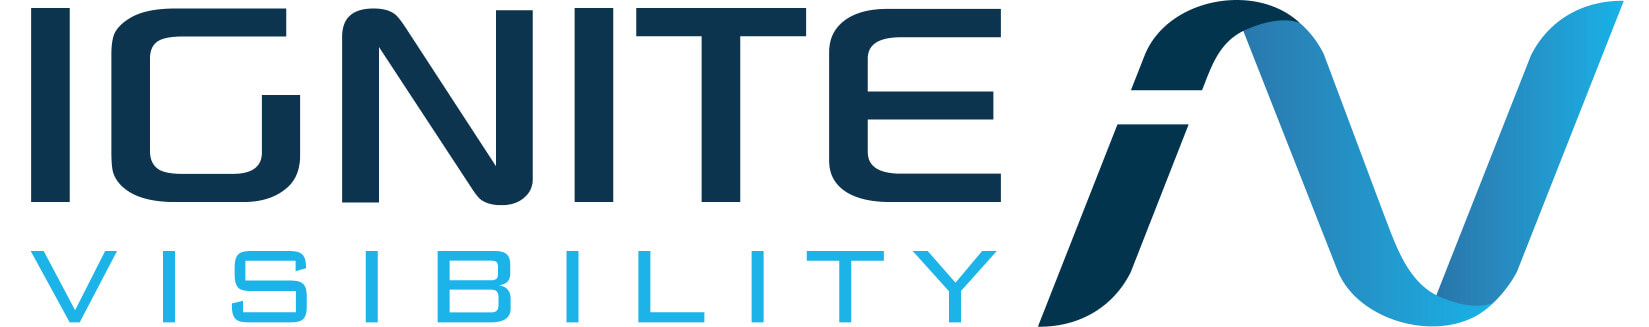 Top Hotel SEO Company Logo: Ignite Visibility